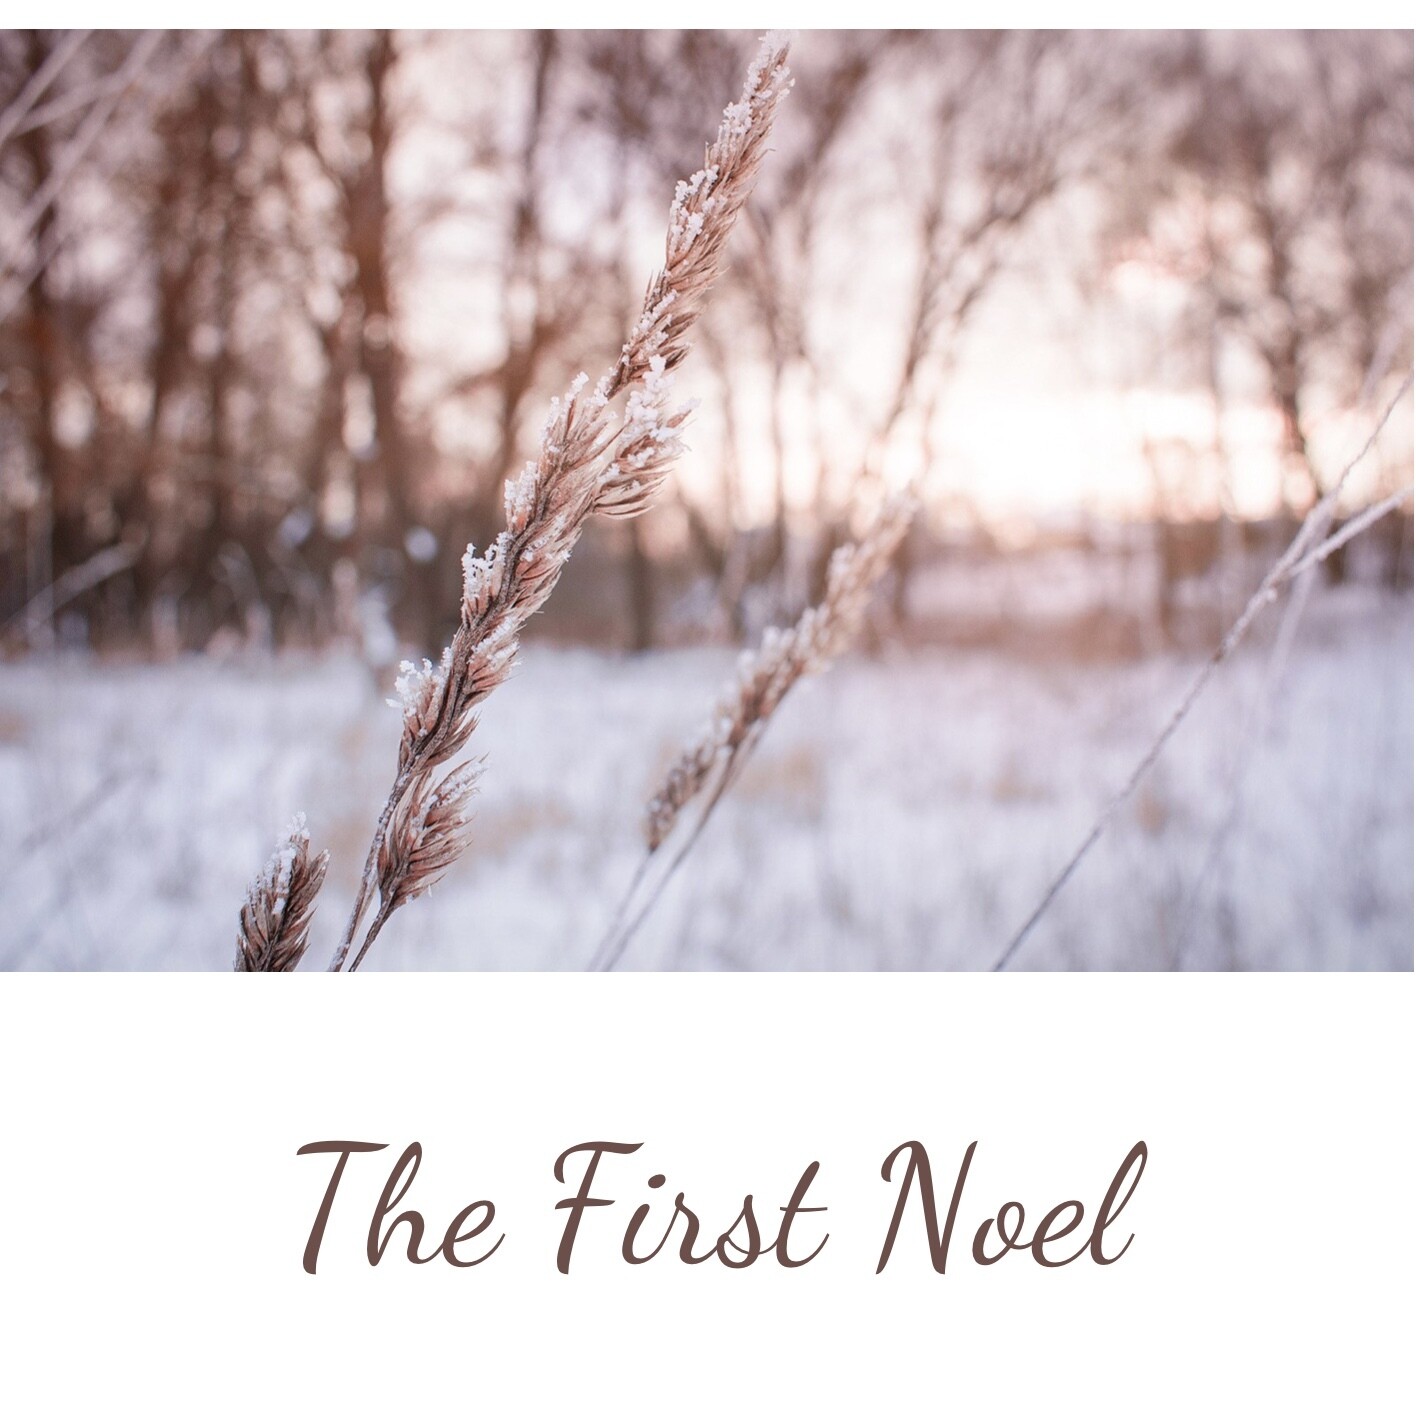 Noten - The First Noel